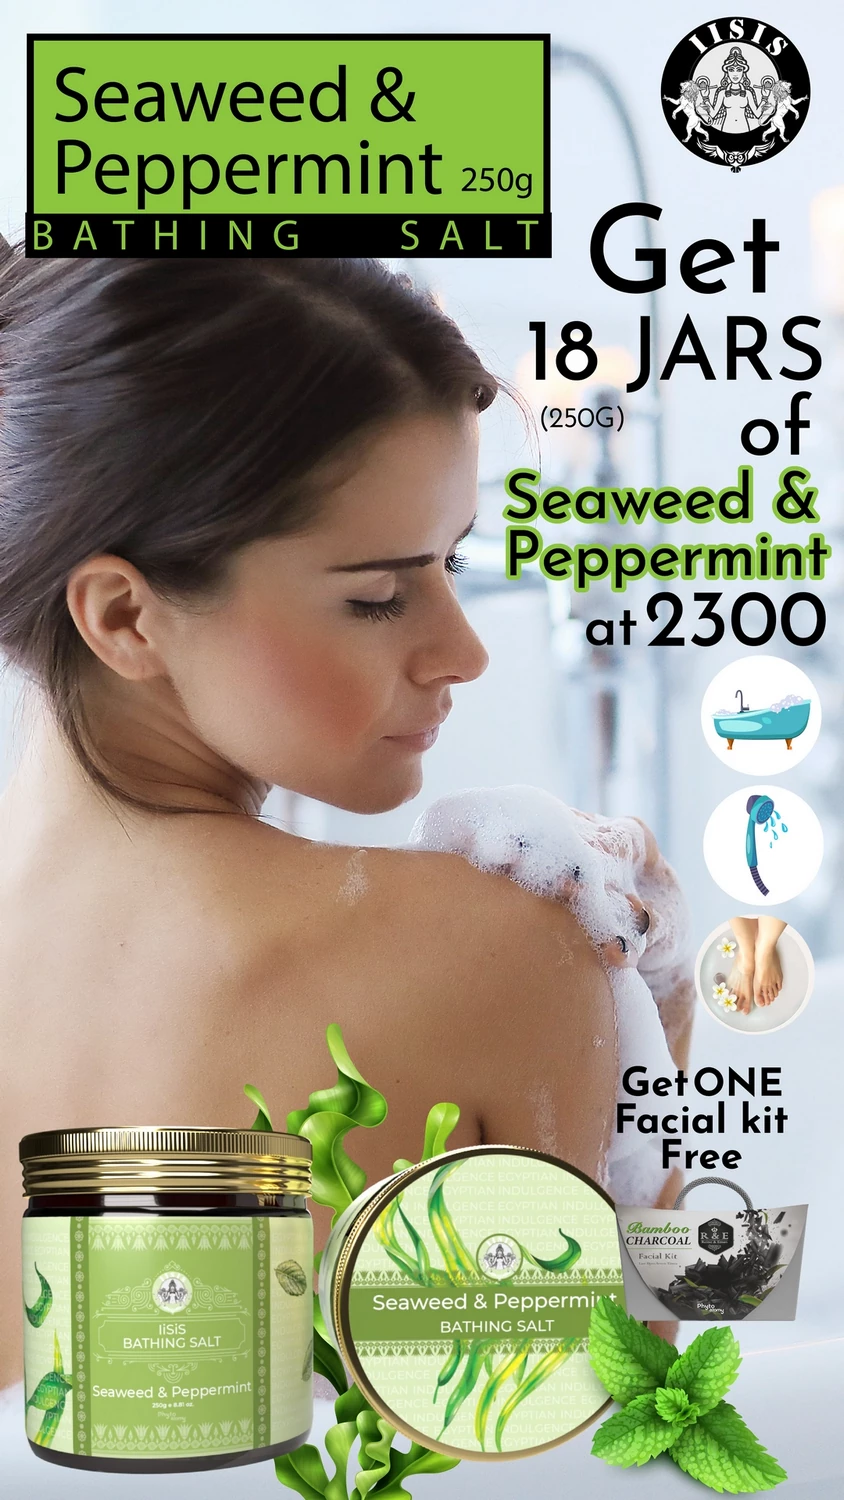 RBV B2B Seaweed & Pepper Bath Salt (250g) -18 Pcs.